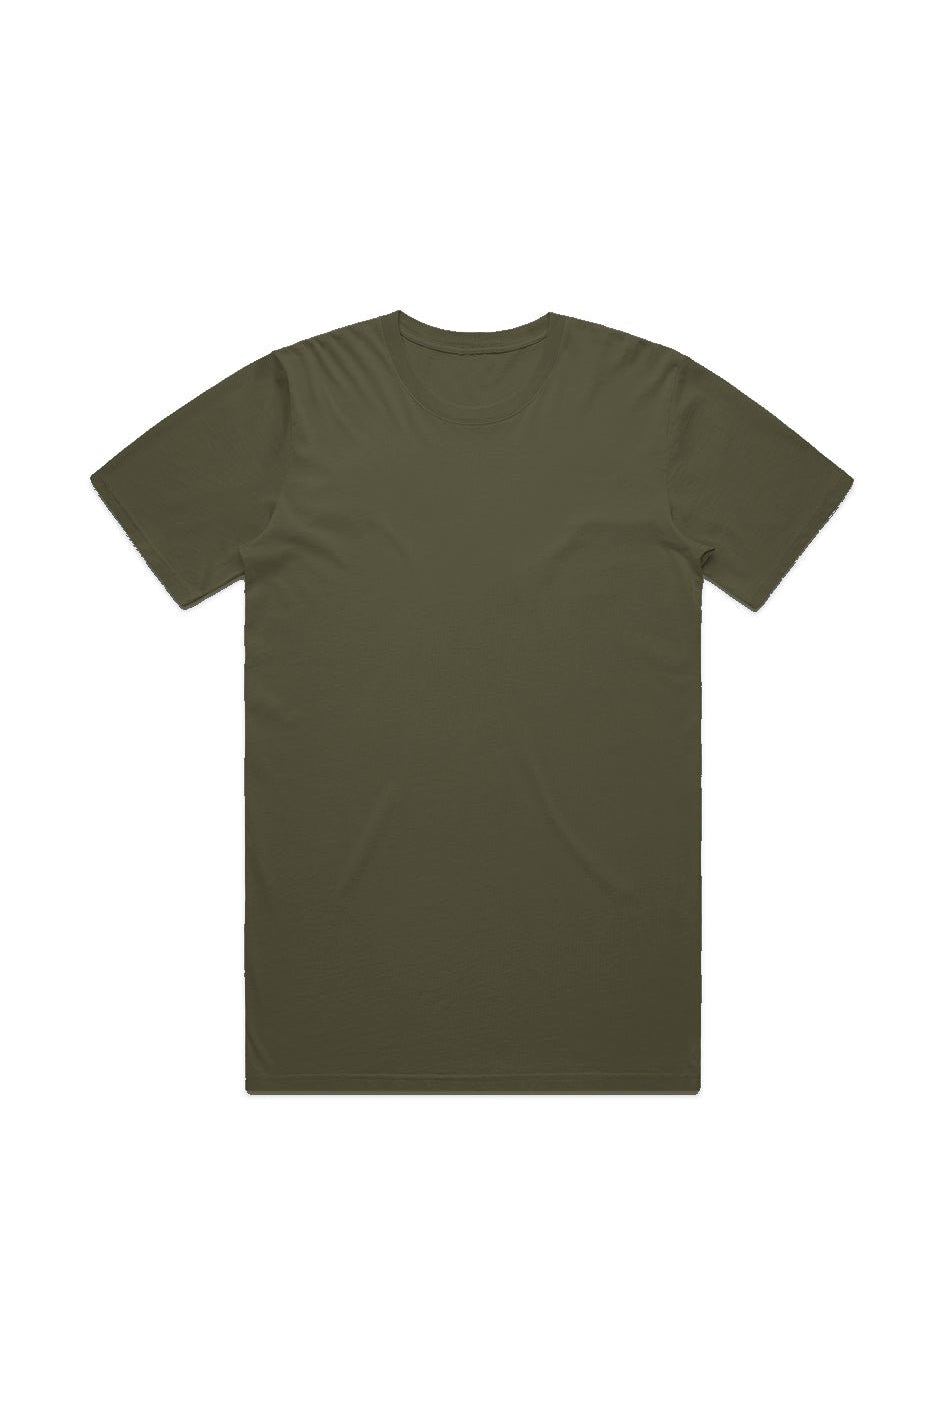 Men's Premium Faded Army T-shirt - Men's T-Shirts - Apliiq - Men's Premium Faded Army T-shirt - APQ-4662016S6A0 - s - Faded Army - Army Green - Army Green T-shirt - Dragon Foxx™